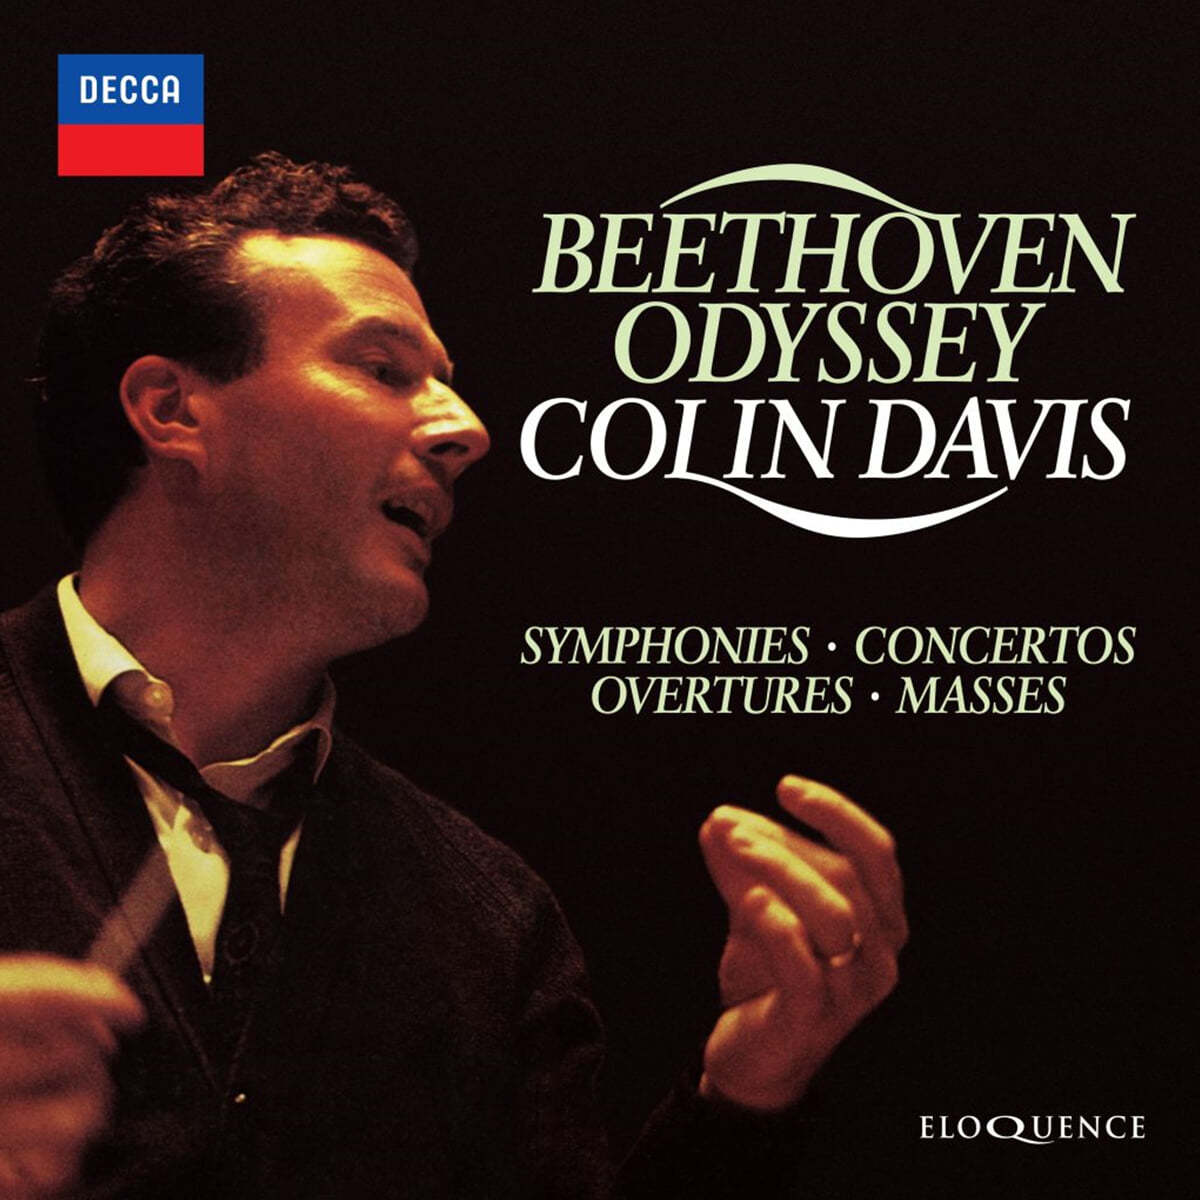 Colin Davis 콜린 데이비스 - 1960~1980년대 필립스 레이블 베토벤 레코딩 모음 (Beethoven Odyssey) 